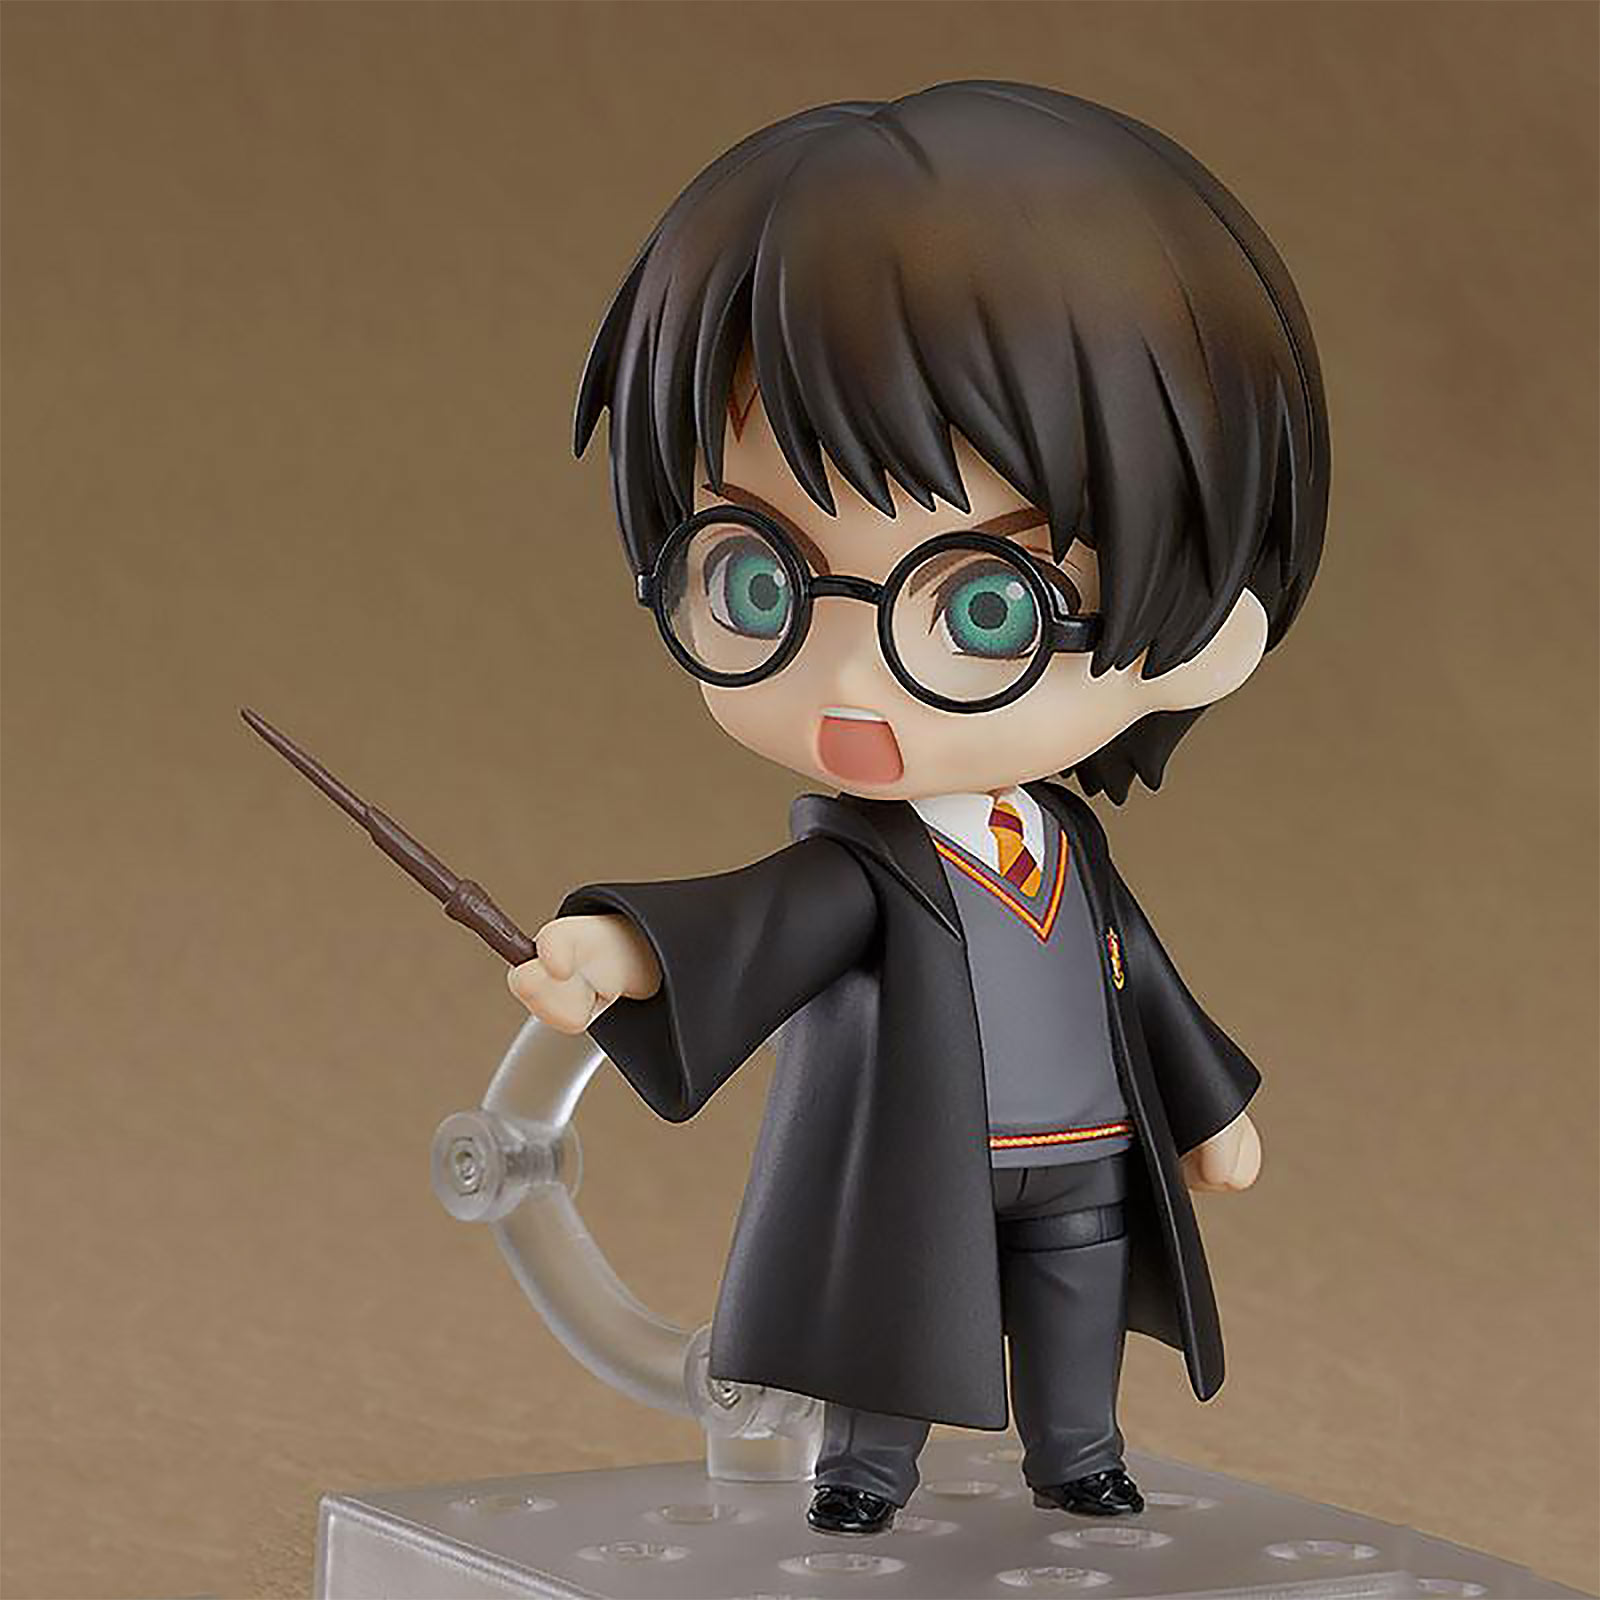 Harry Potter - Action Figure